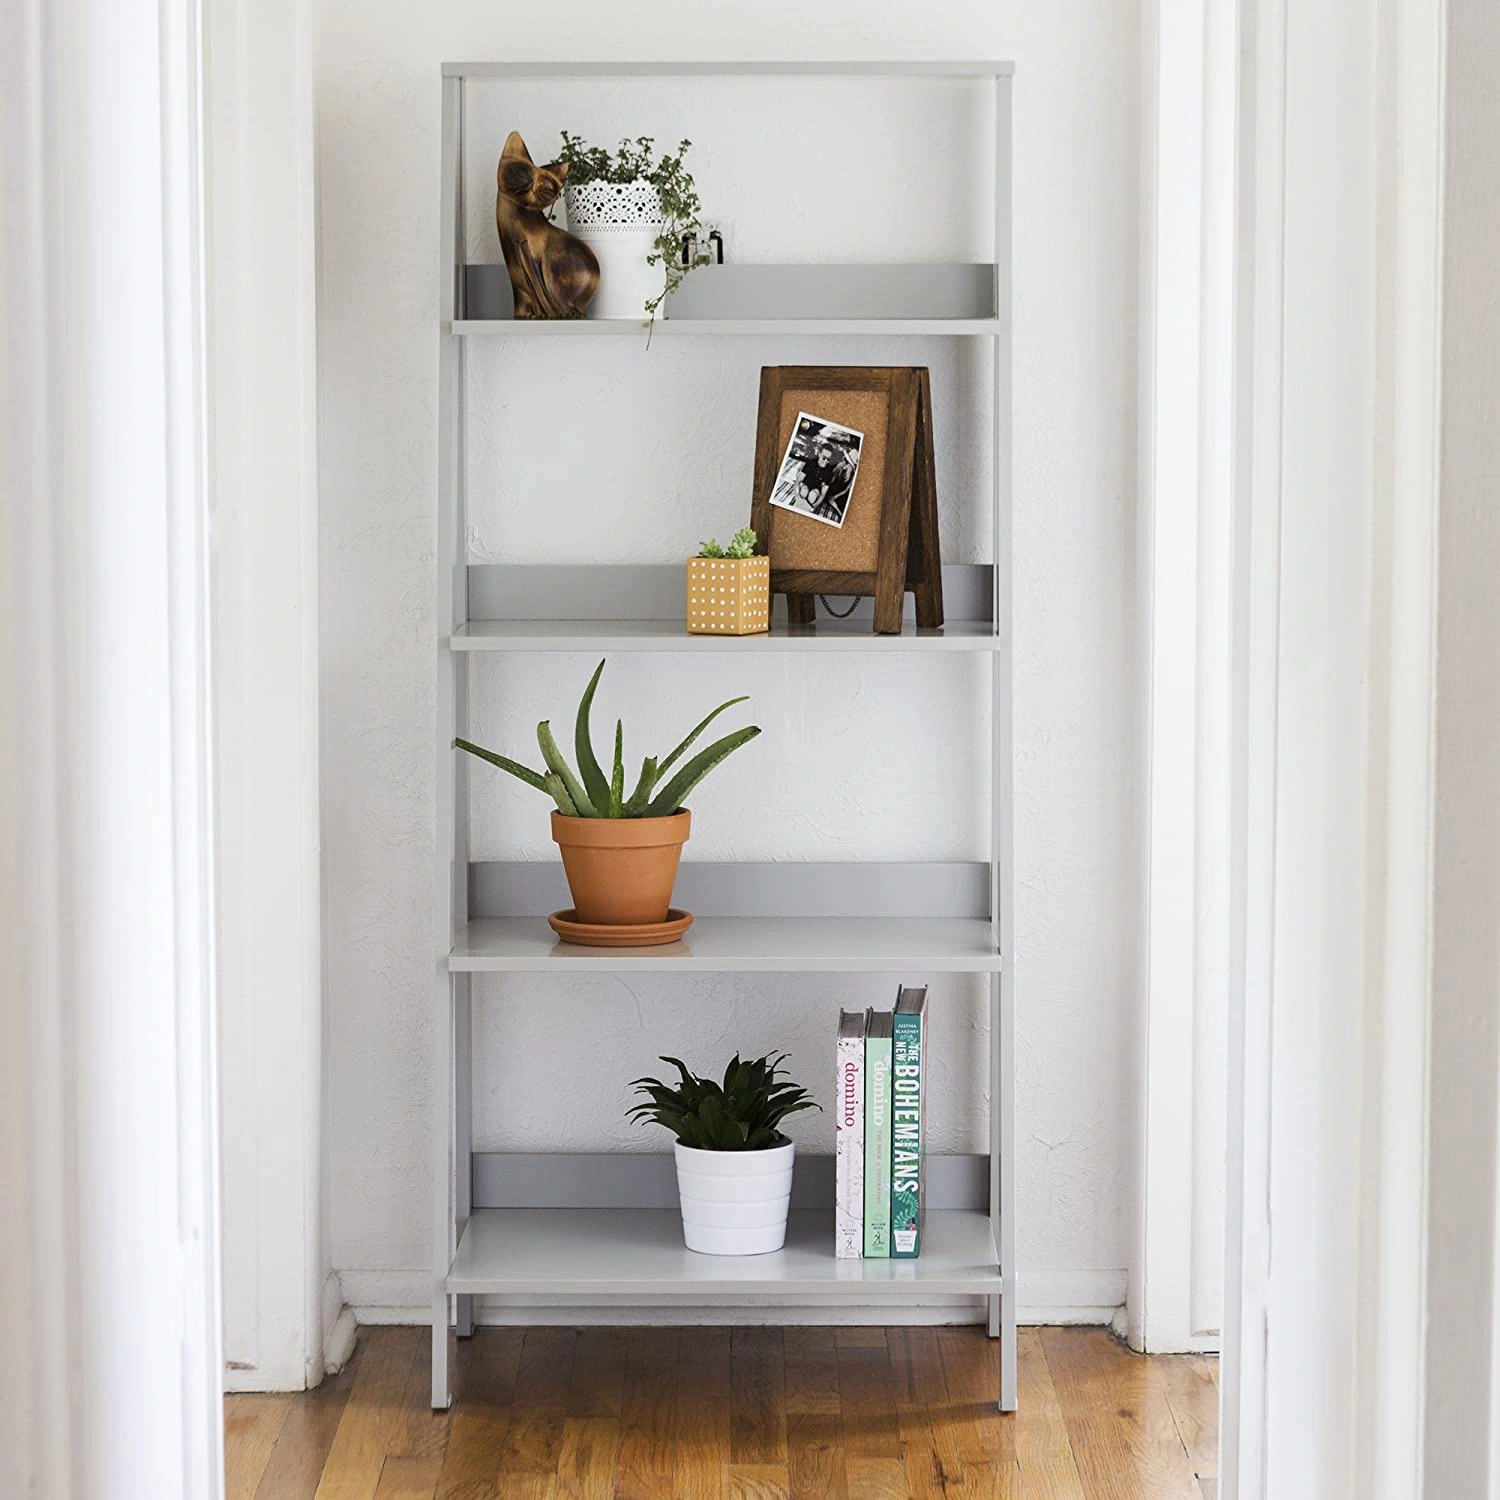 Living Room Storage Shelf Ladder Bookcase 4 Tier Bookshelf with white color